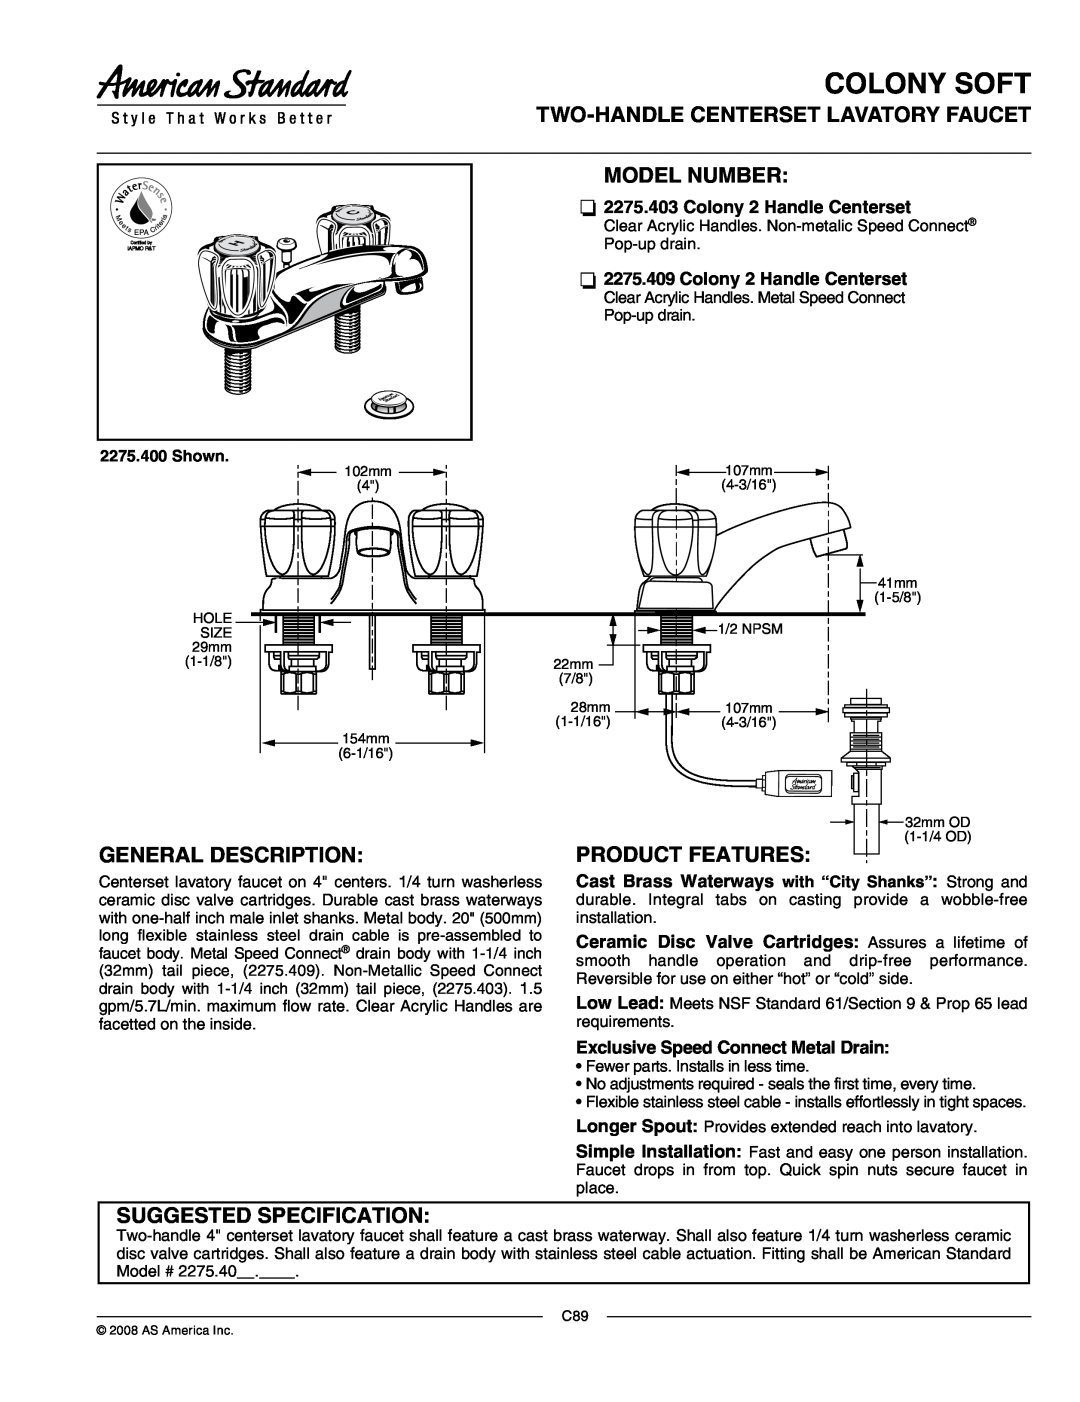 American Standard 2275.403 manual Colony Soft, Two-Handlecenterset Lavatory Faucet Model Number, General Description 